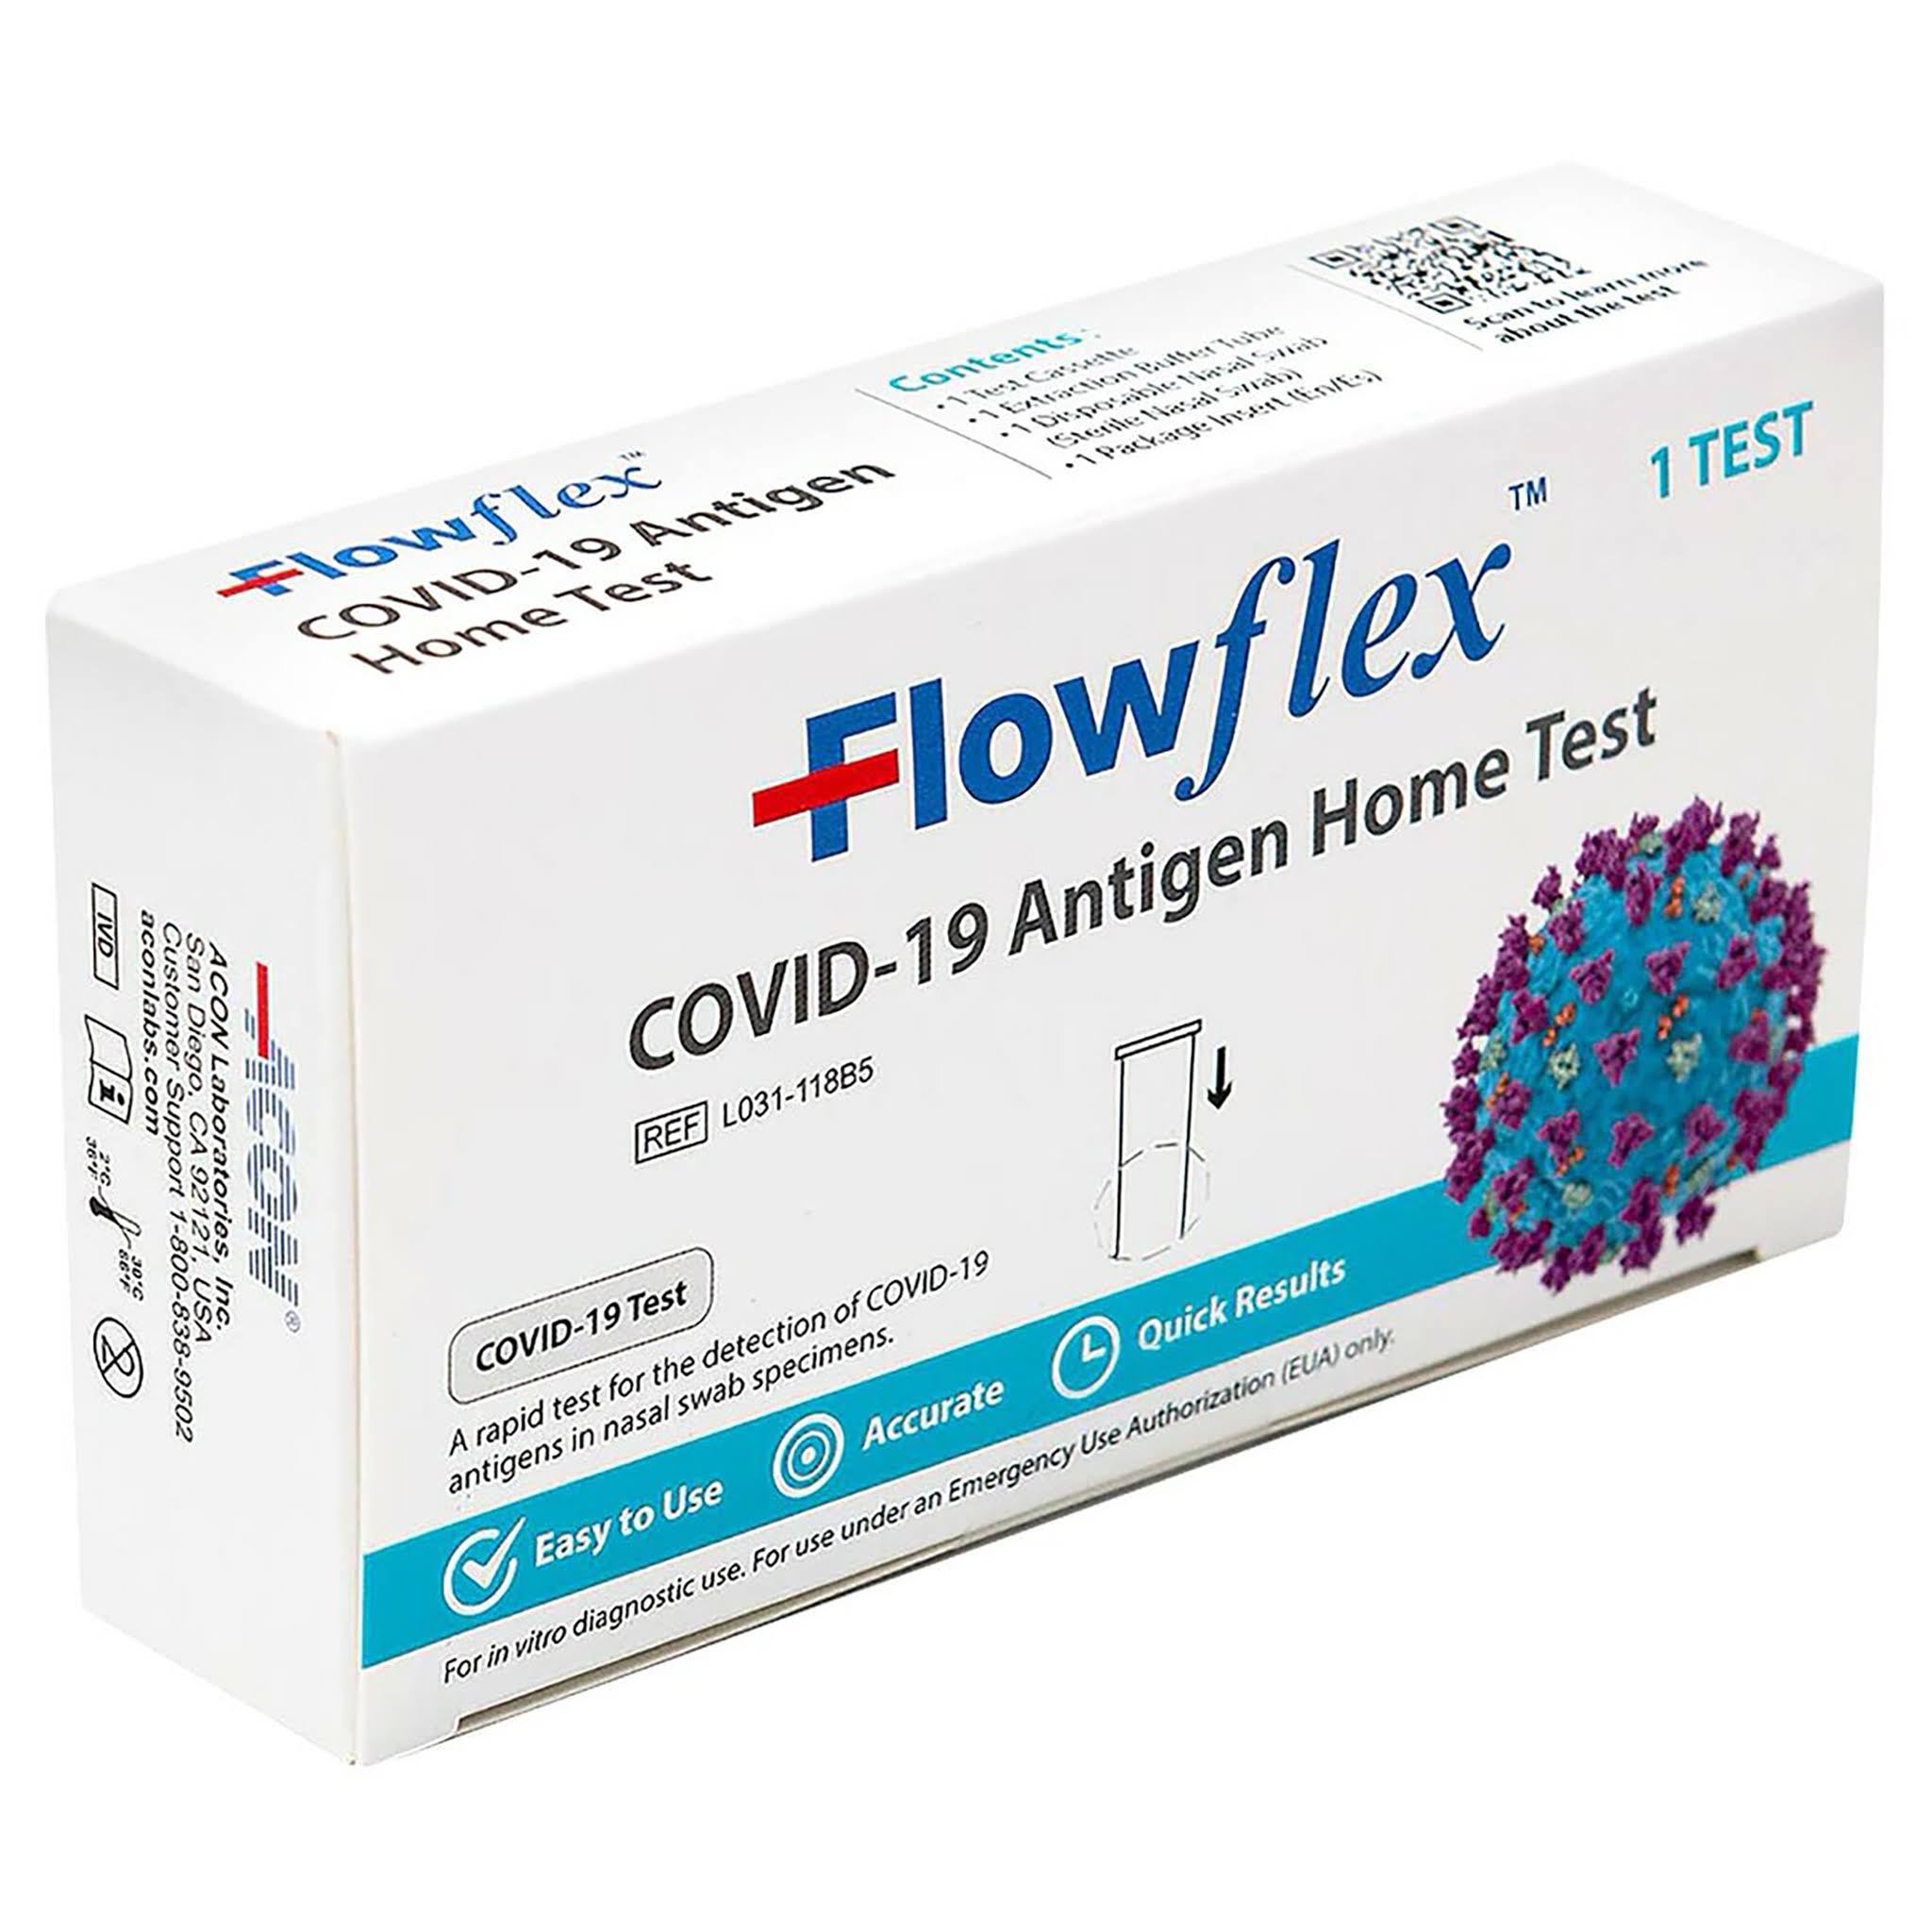 Flowflex Covid -19 Antigen Home Test